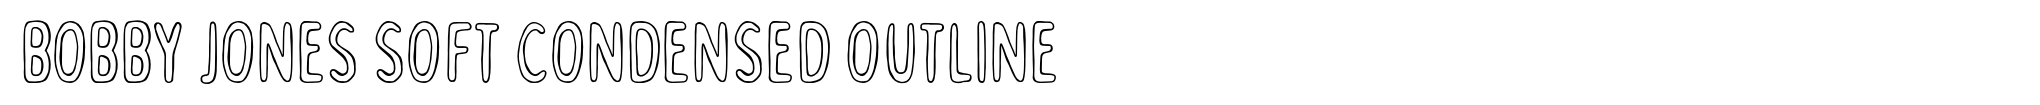 Bobby Jones Soft Condensed Outline image